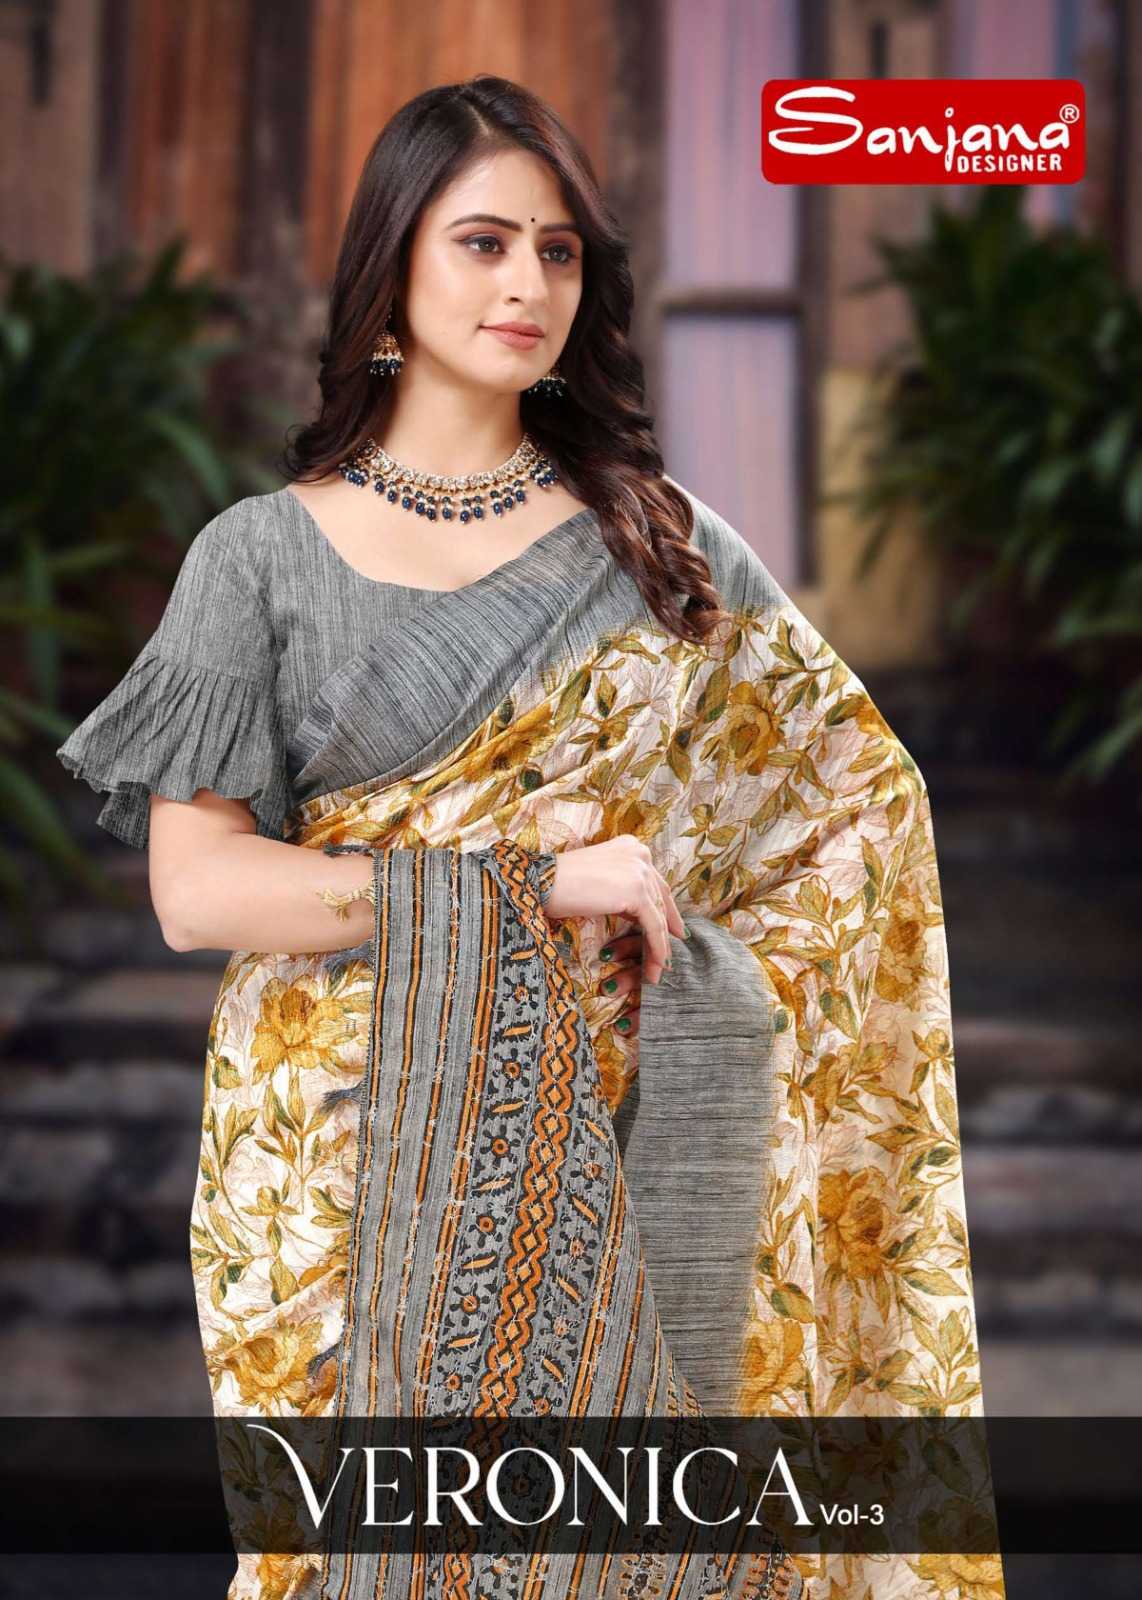 veronica vol 3 by sanjana designer amazing silk sarees collection